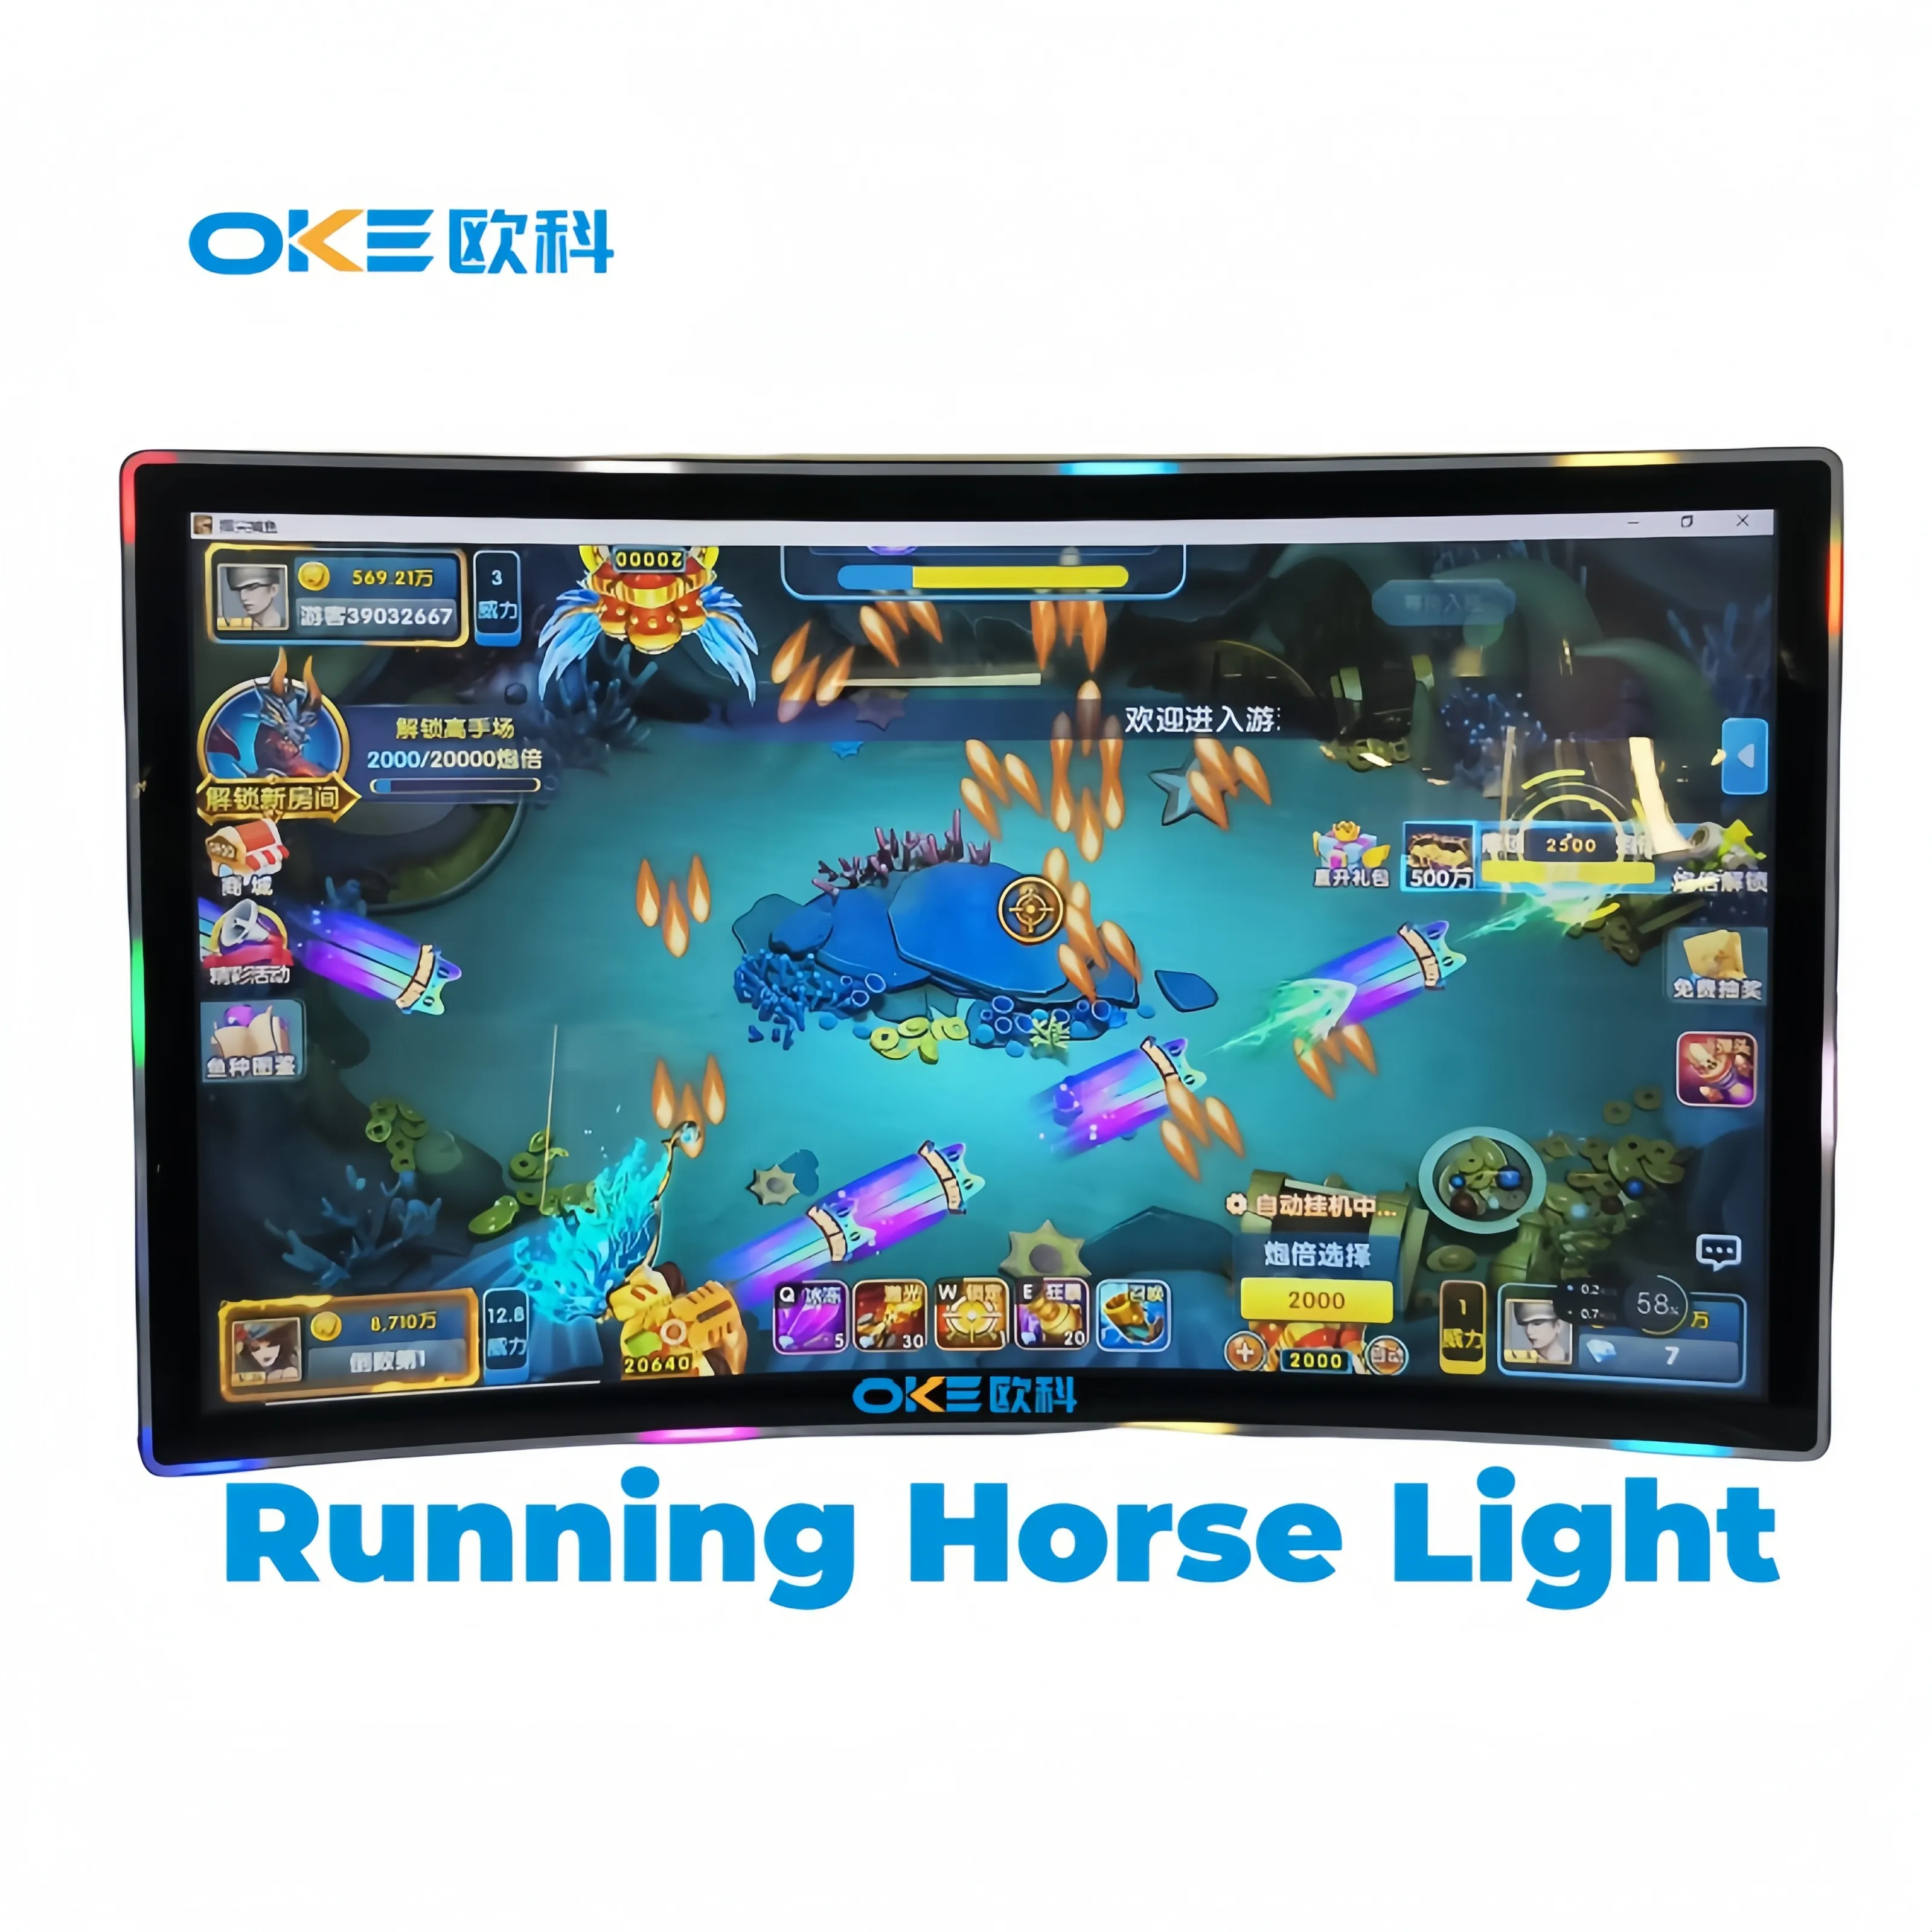 OKE di alta qualità 4K 4096*4096 PCAP touch screen da 43 pollici 3M Monitor tattile curvo da gioco con luce a LED